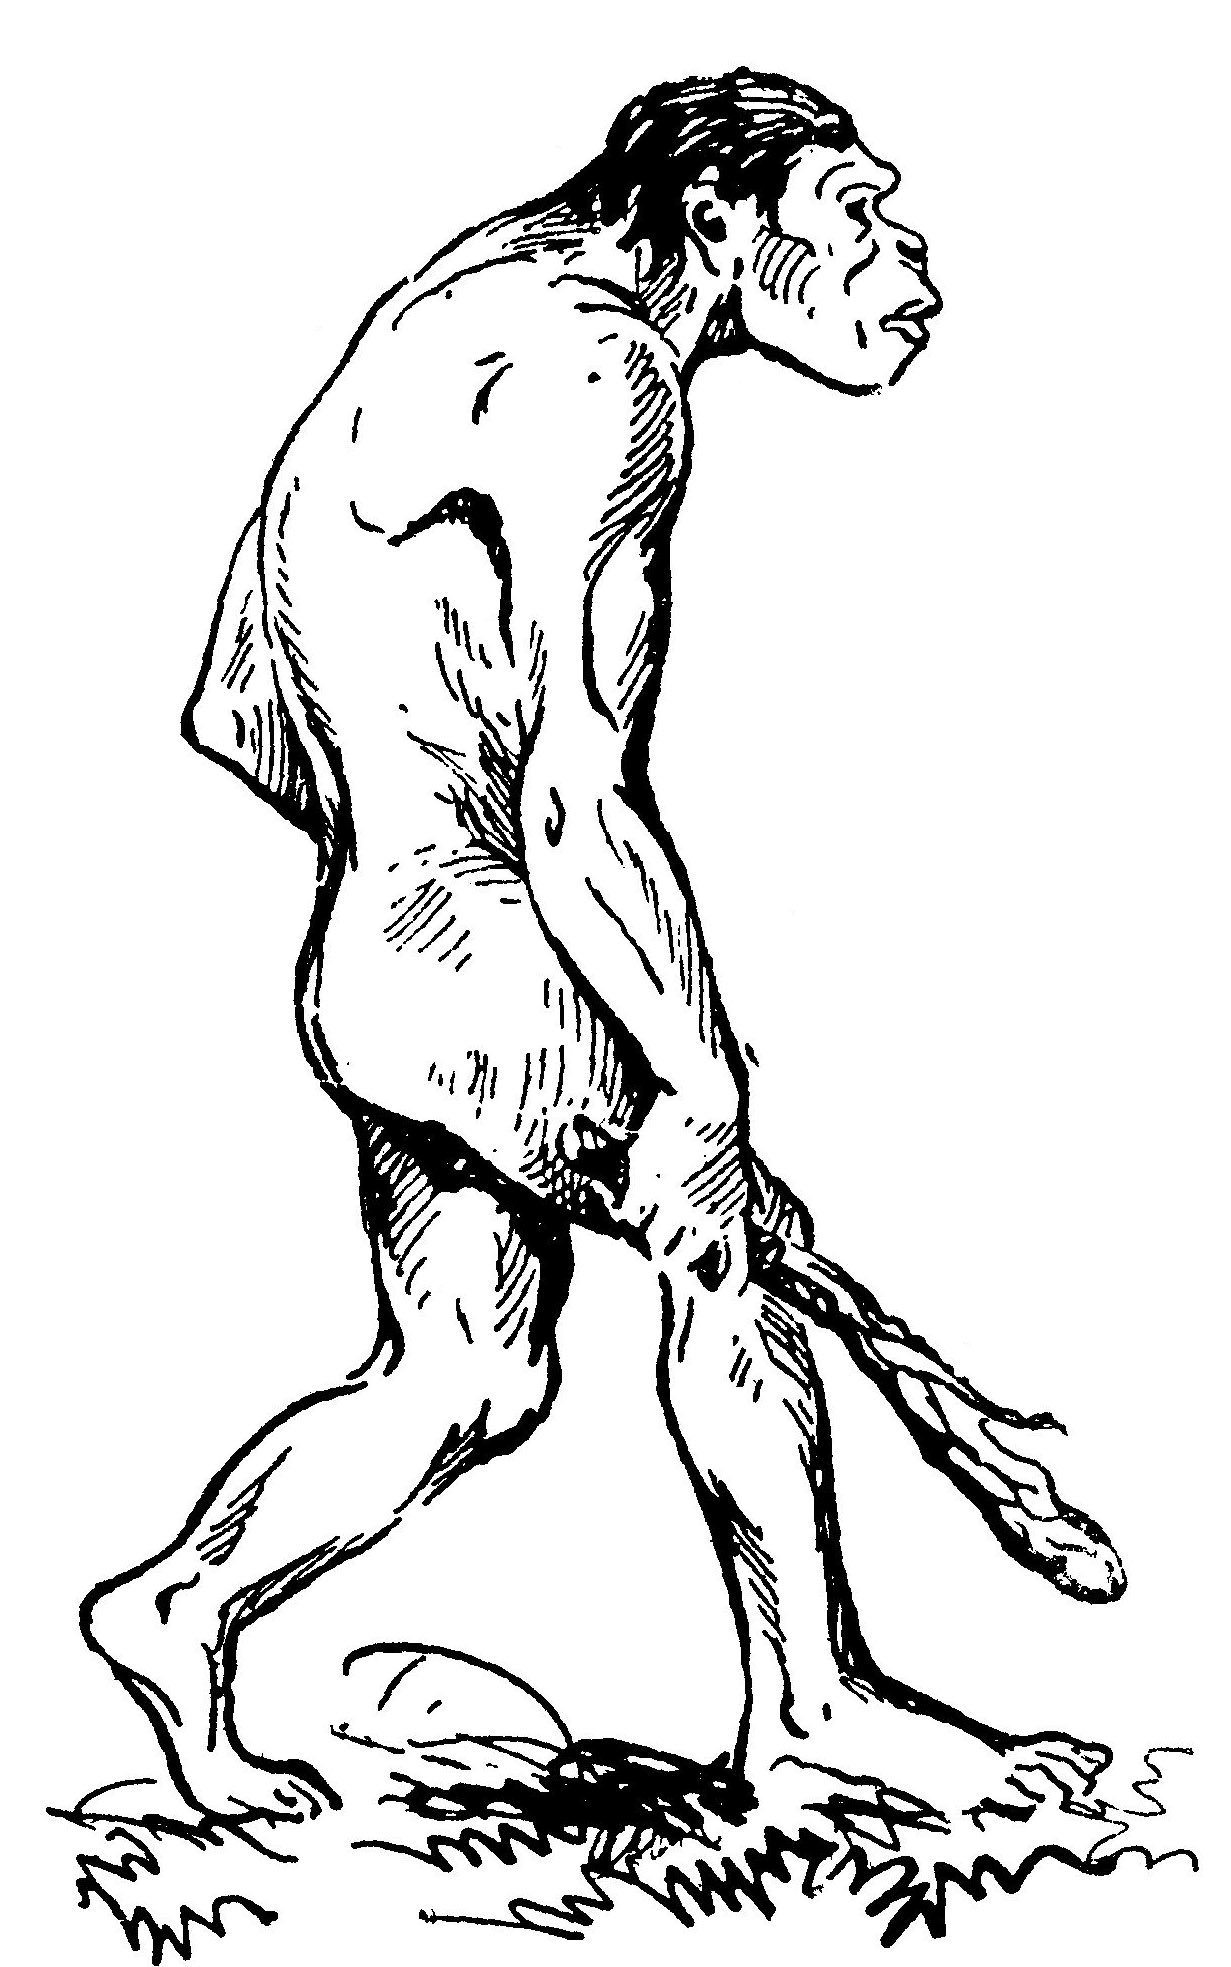 Нарисовать первобытного. Древний человек питекантроп. Неандерталец древний человек рисунок. Питекантроп эпоха. Нарисовать первобытного человека.